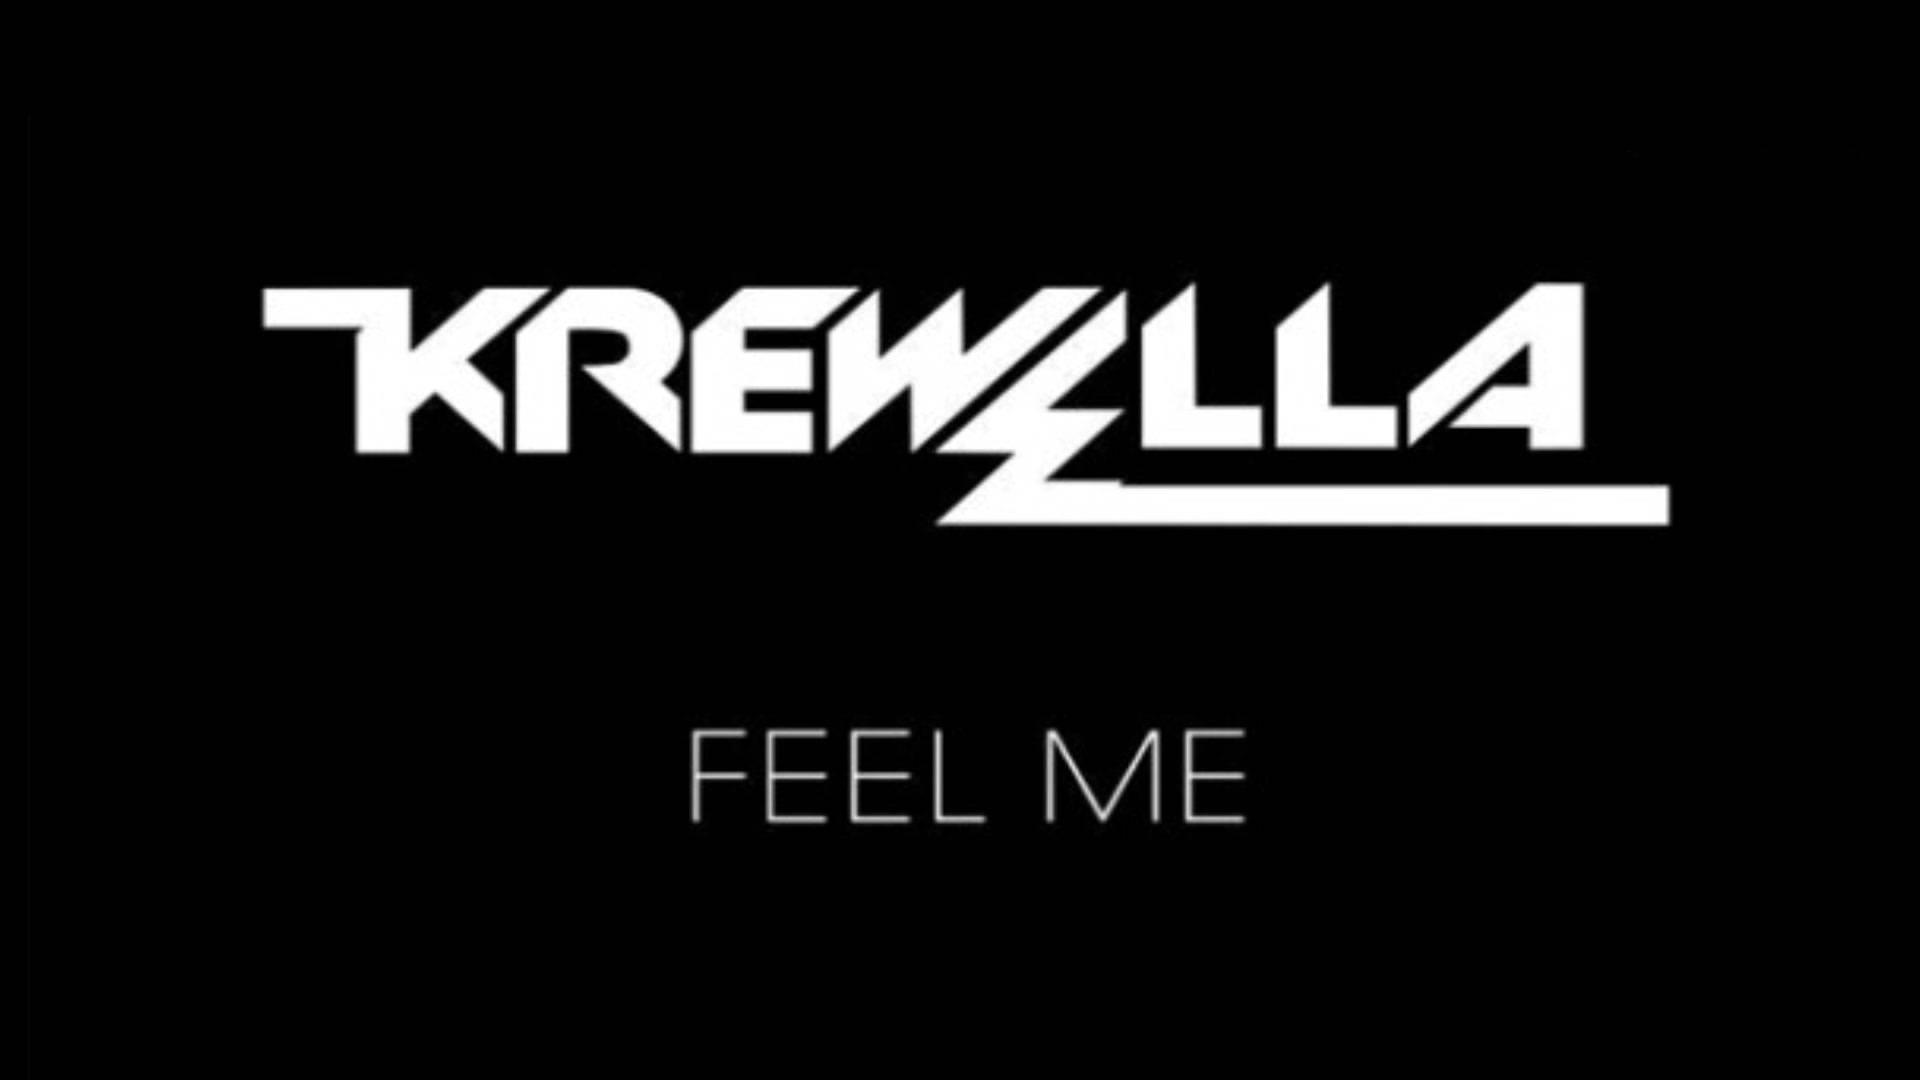 Krewella - Feel Me [Dubstep] (Lyrics) [HQ] - YouTube